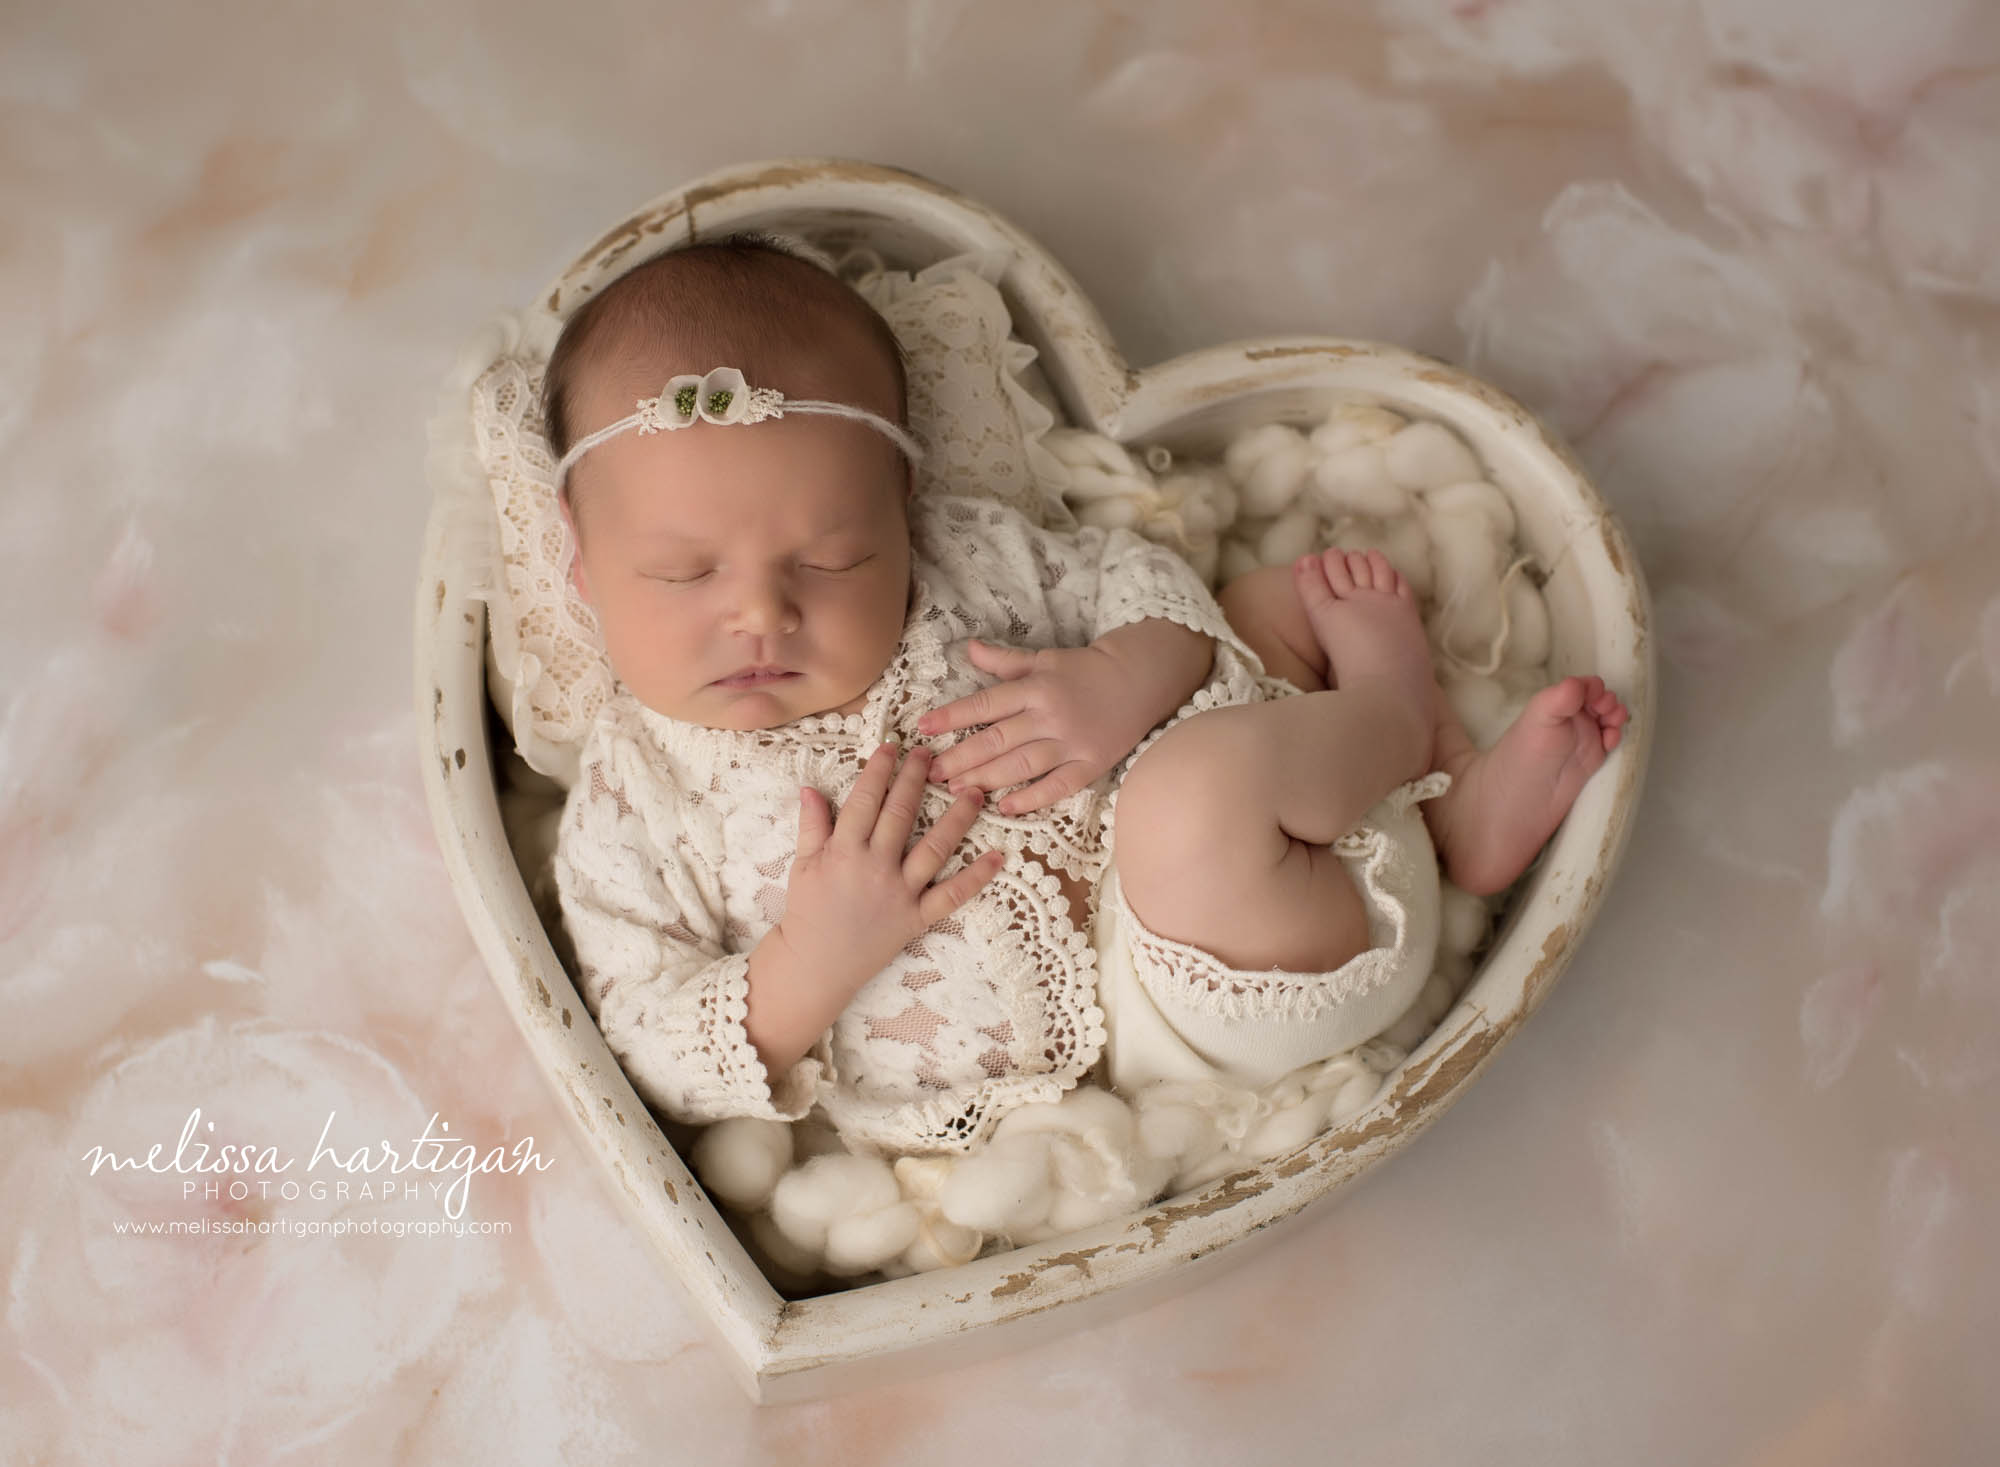 newborn baby girl posedin cream wooden heart shaped newborn photography prop wearing cream newborn girls outfit